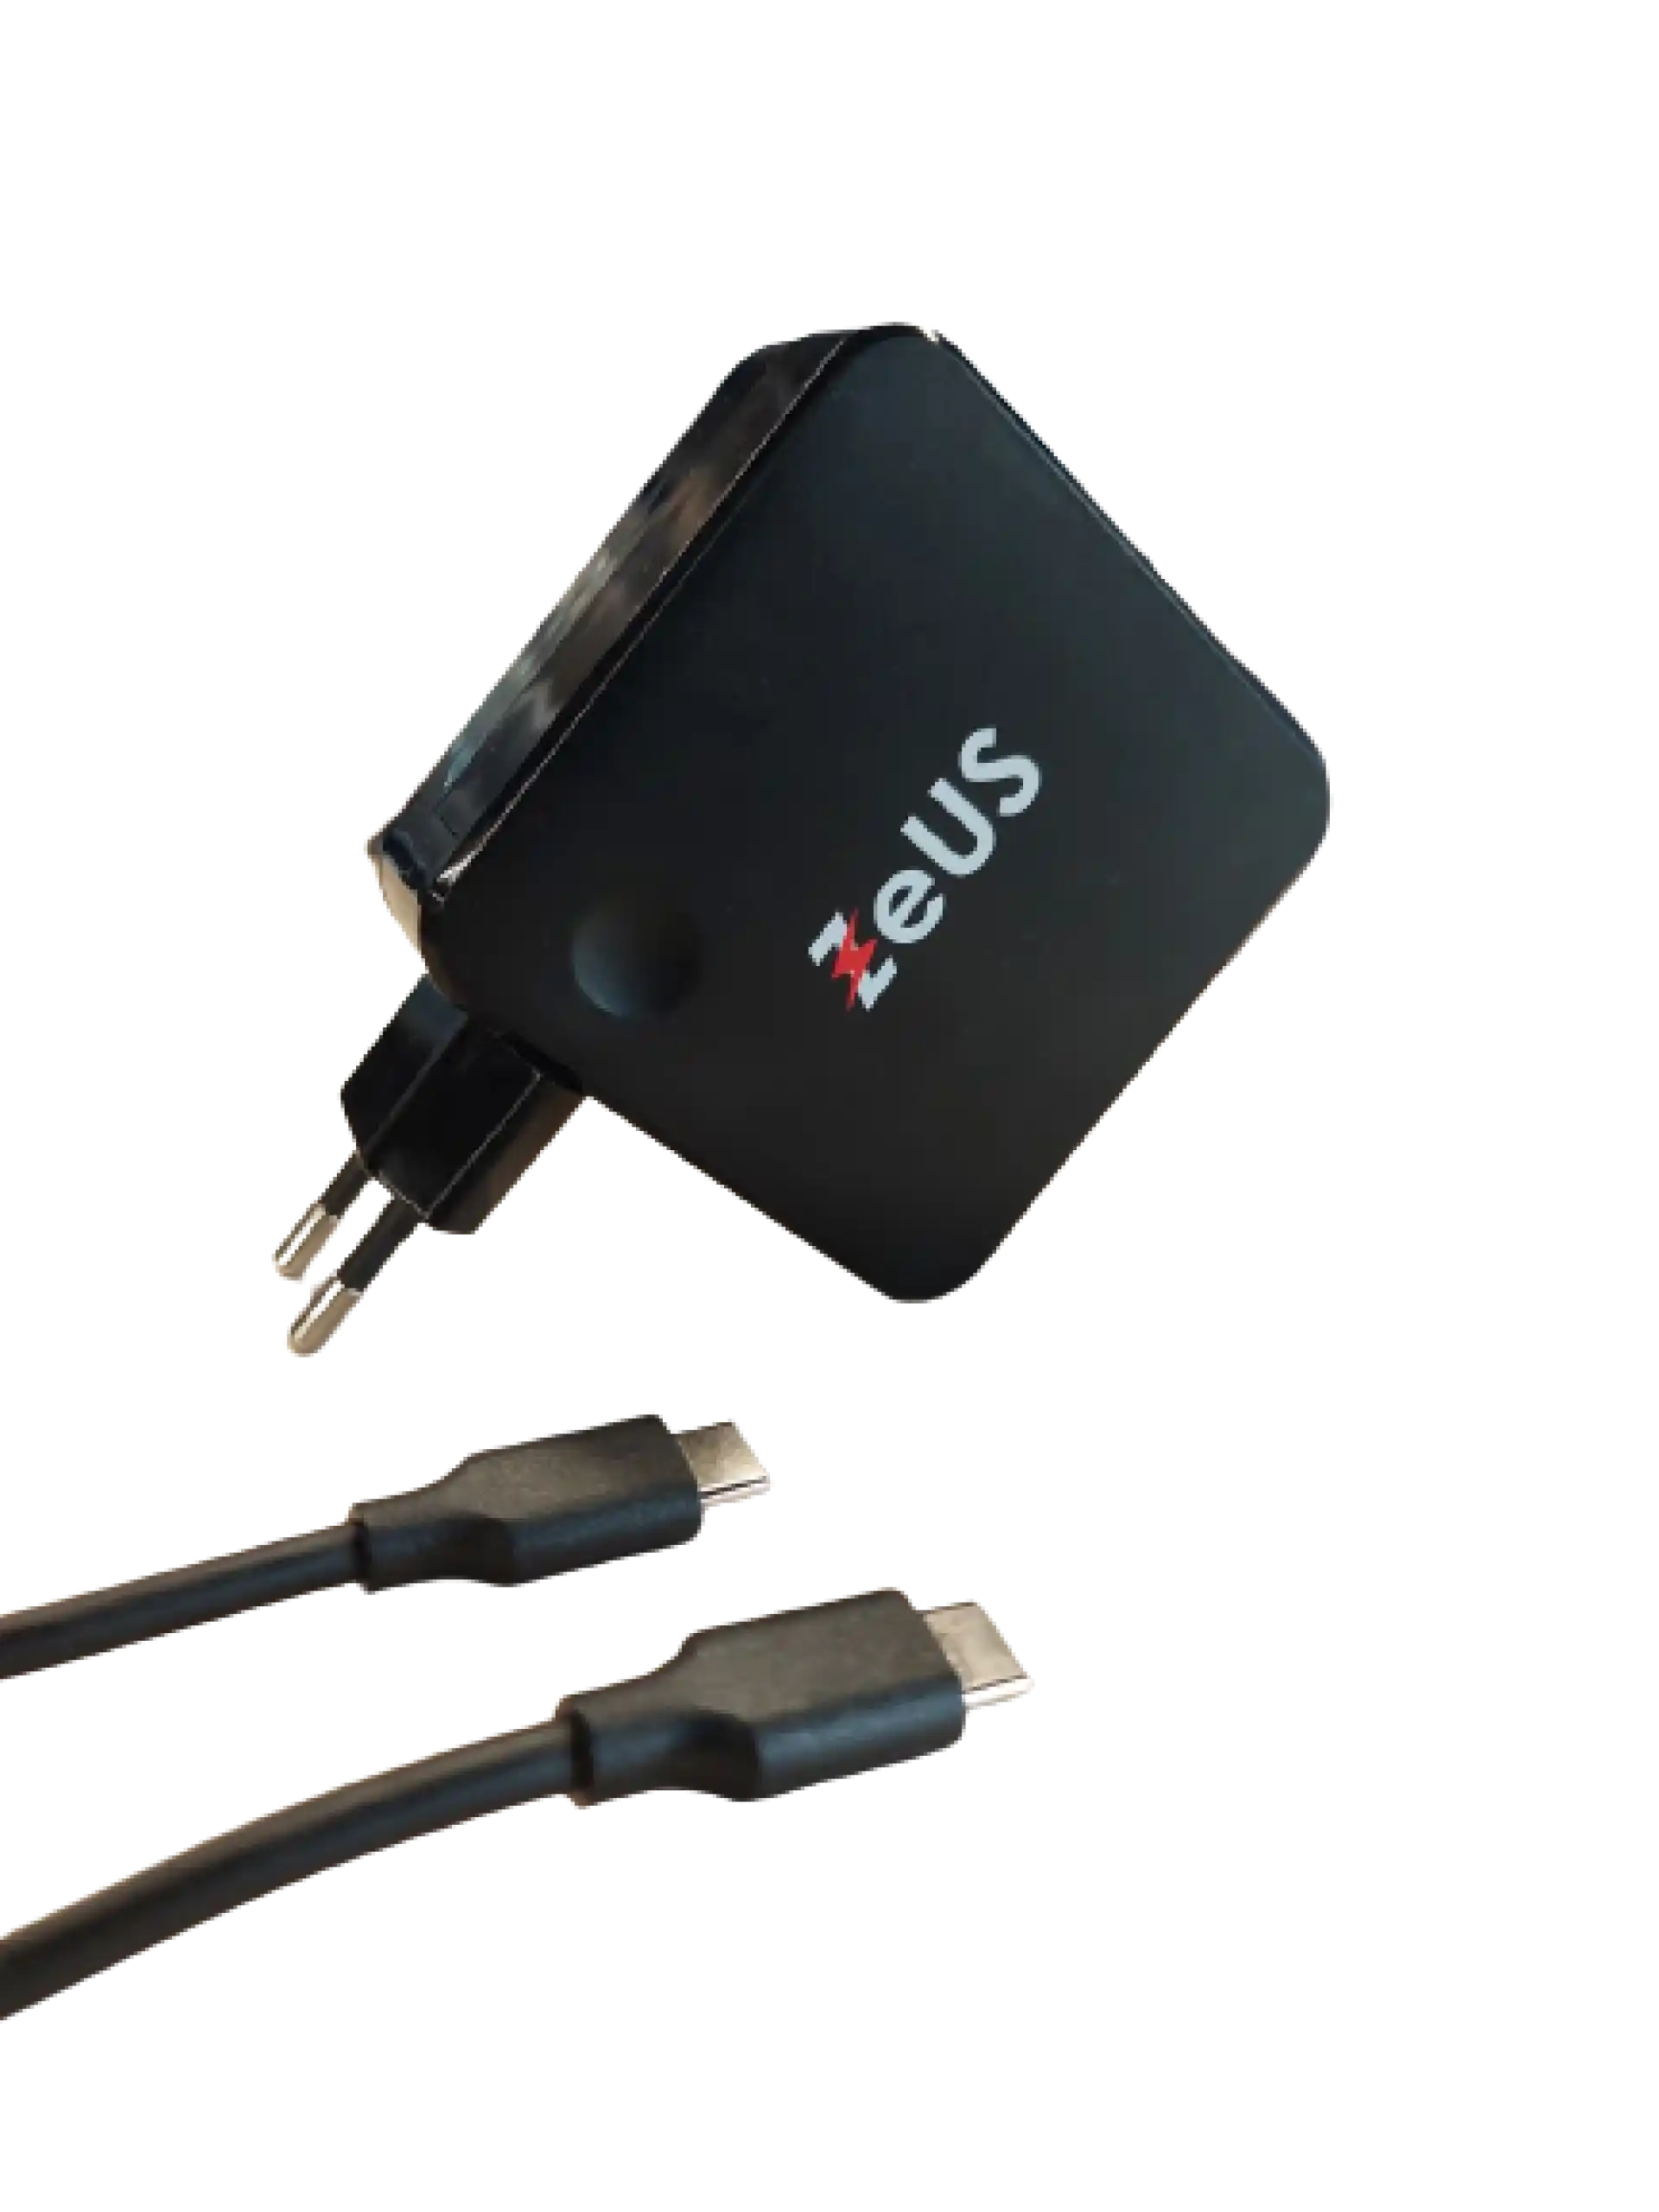 Punjač univerzalni ZEUS ZUS-NB65 PDC USB-C 65W za laptop,tablet,smart phone